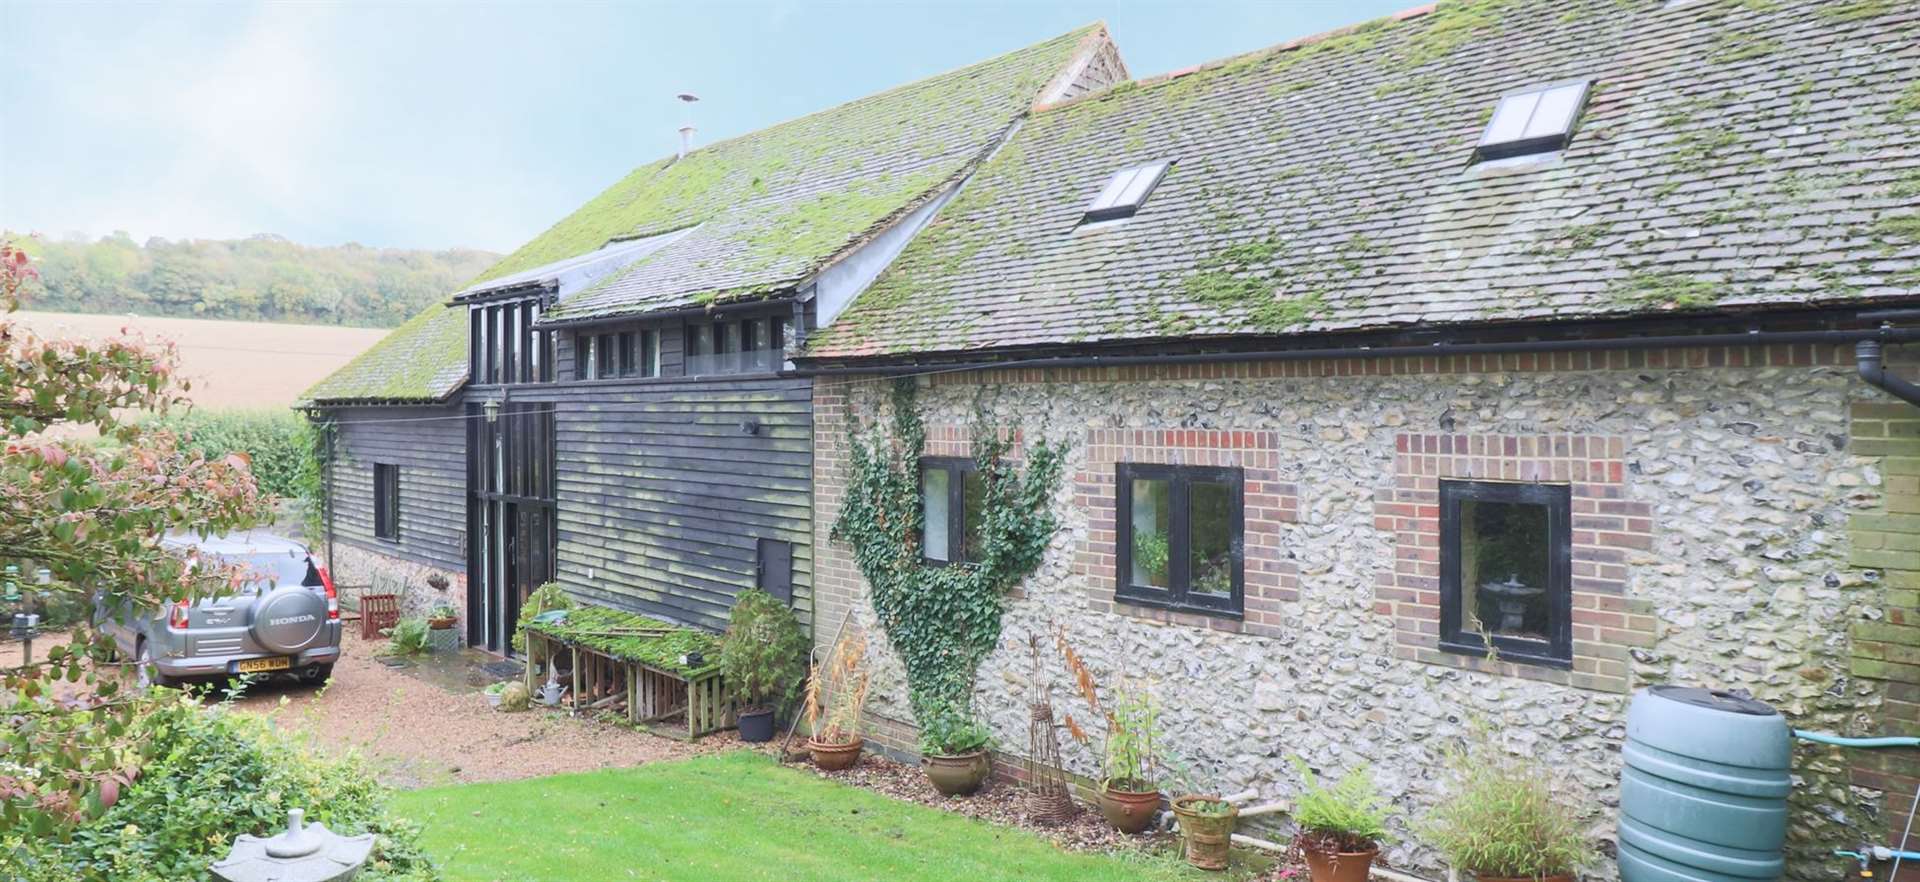 Converted barn Samain is priced at £700,000